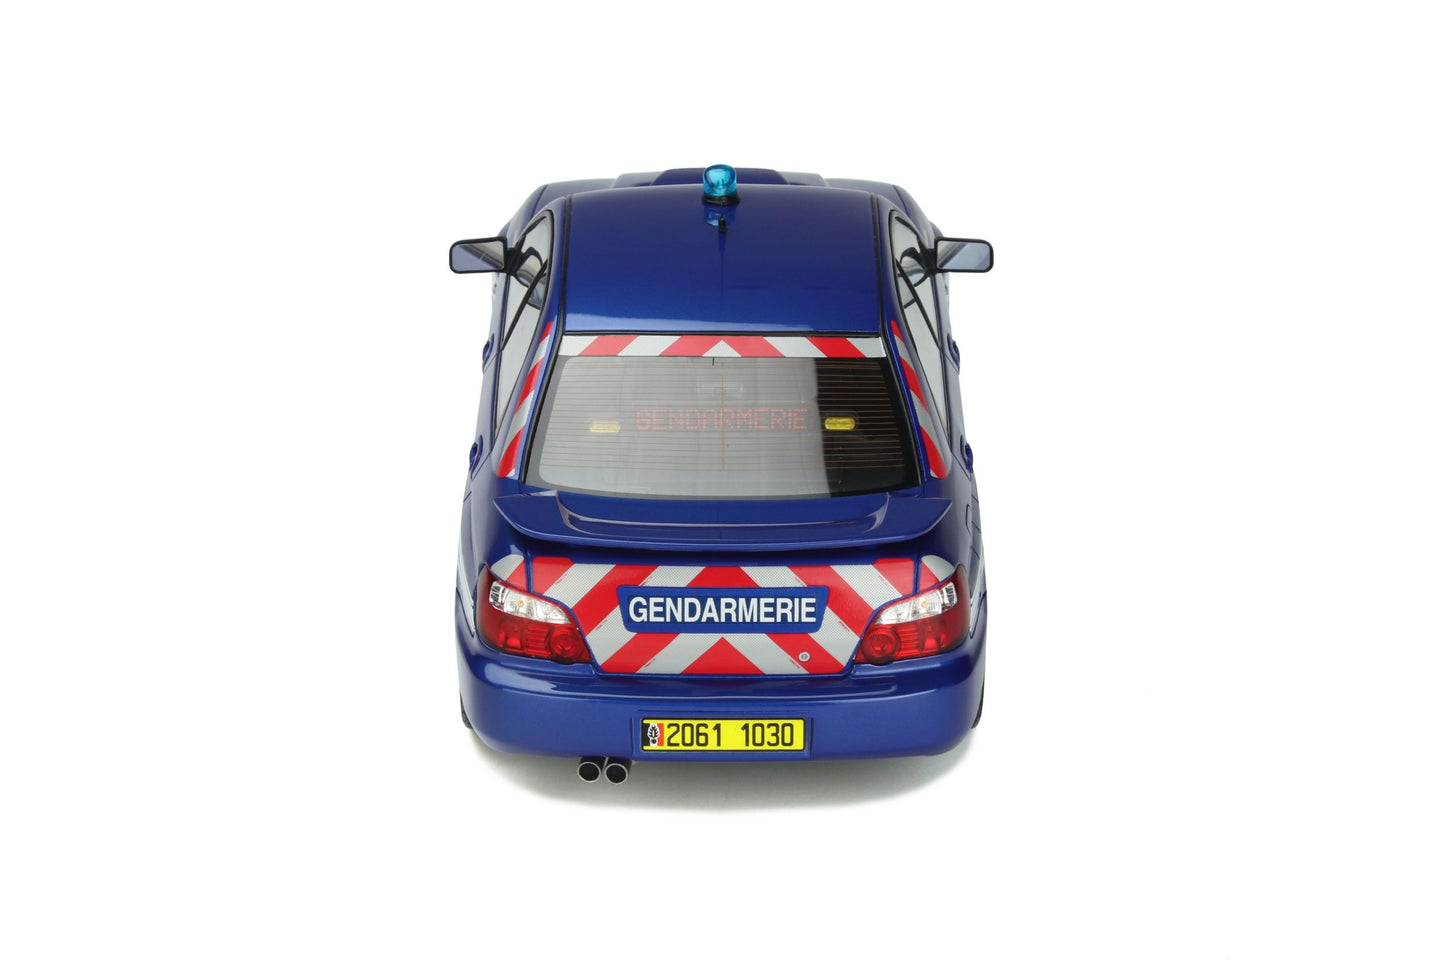 OttOmobile - Subaru Impreza WRX "Gendarmerie Police Car" (World Rally Blue) 1:18 Scale Model Car